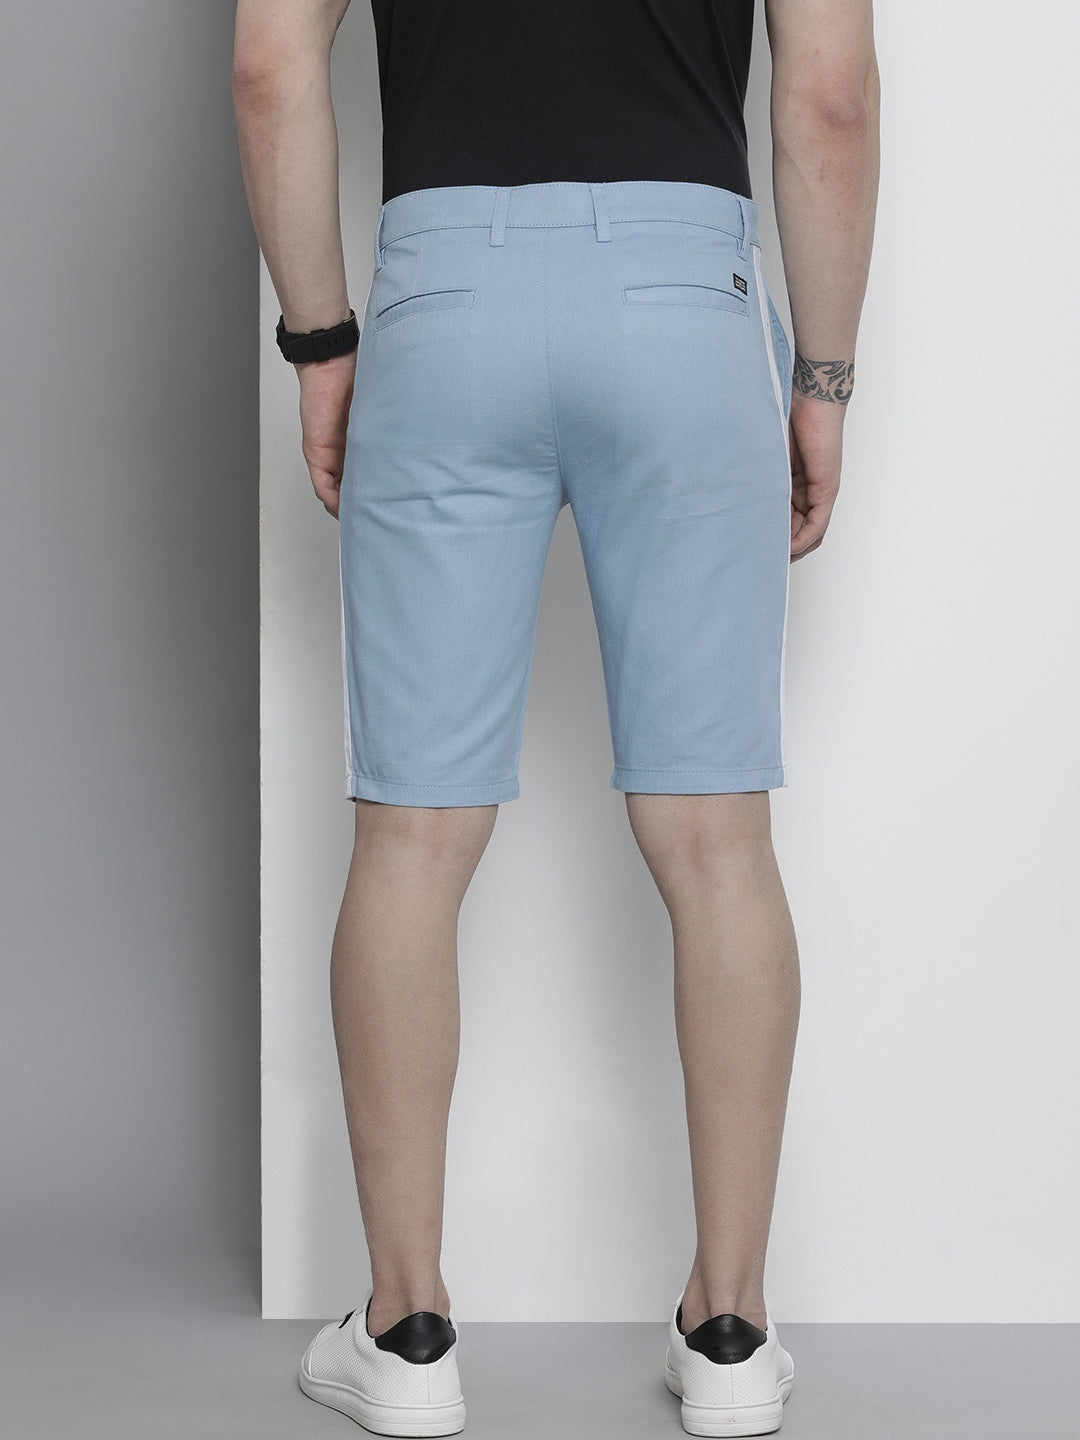 Shop Men Chino Shorts Online.